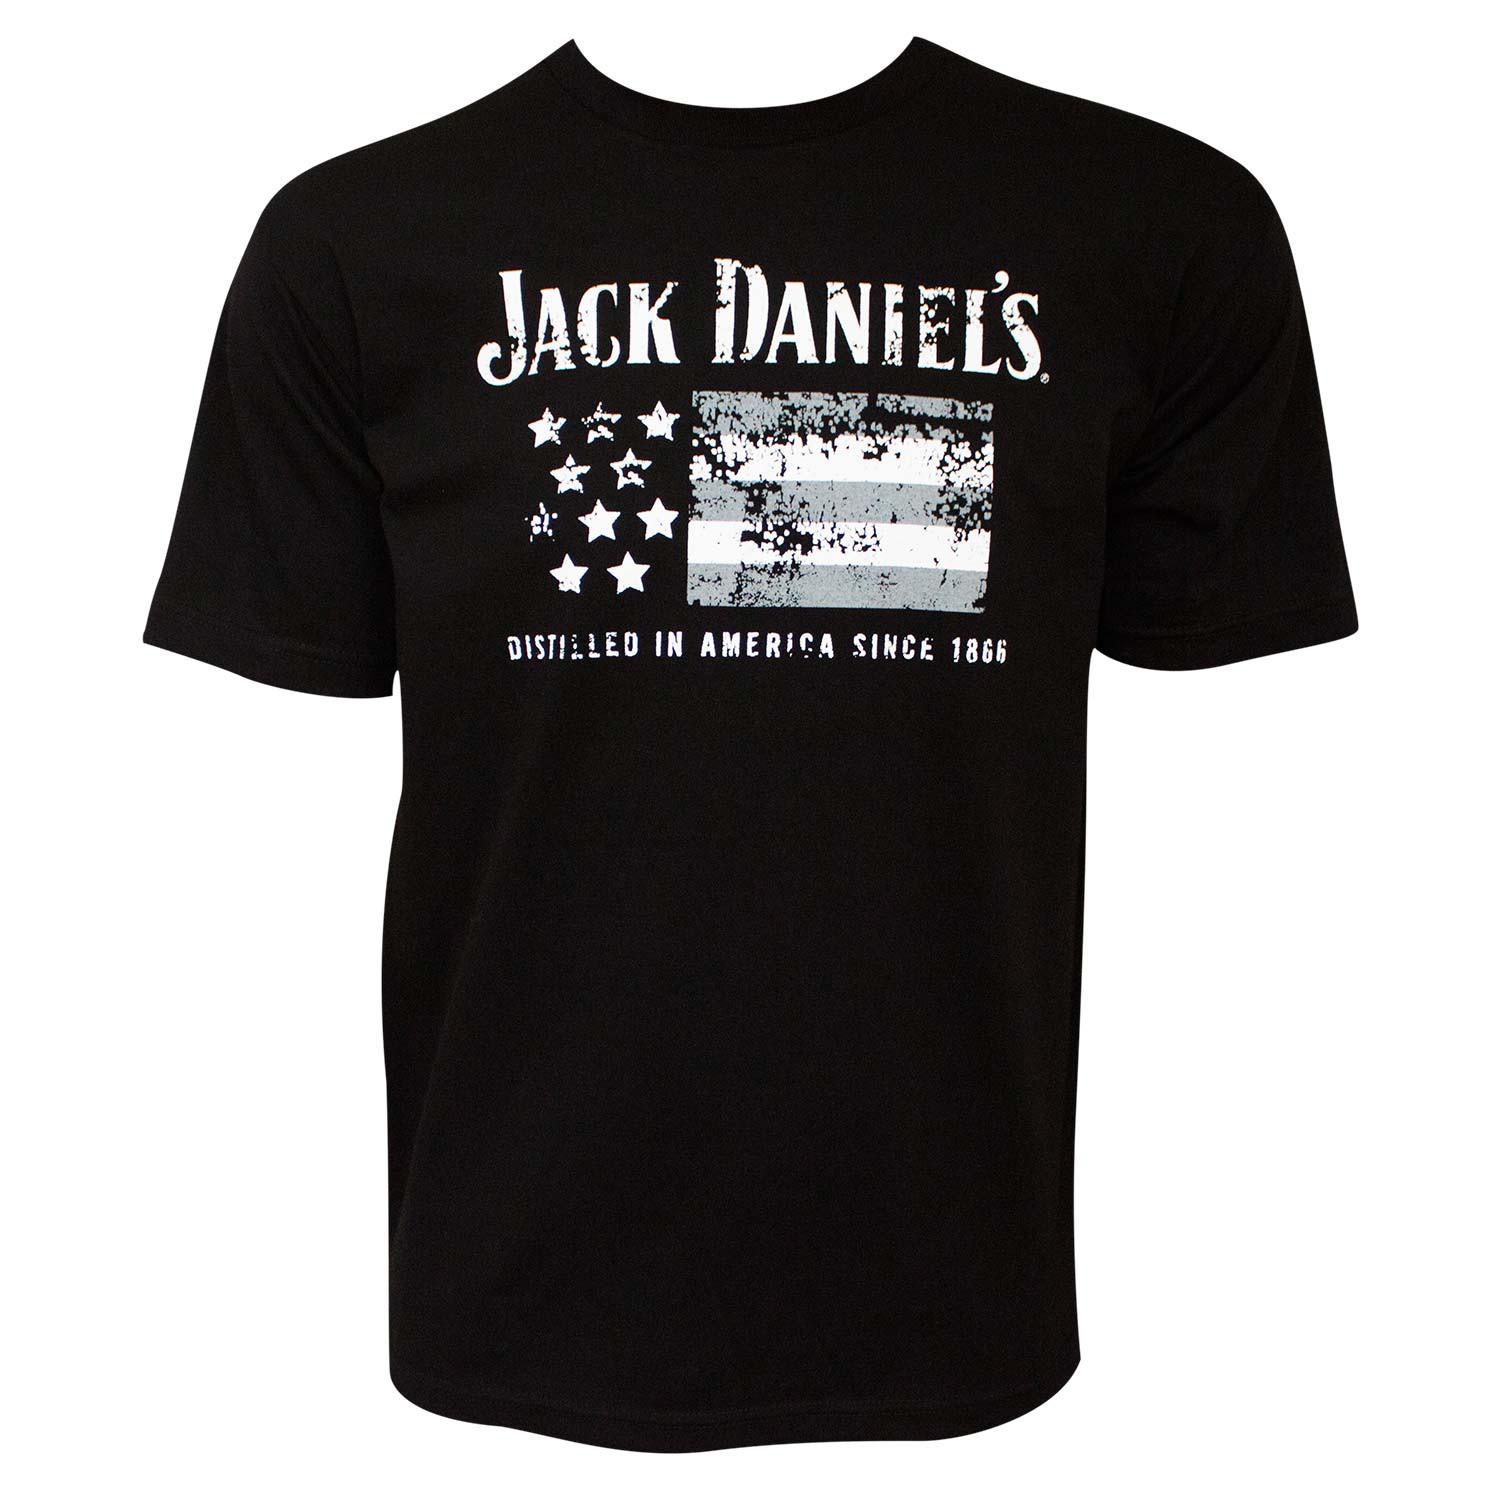 Jack Daniel's Distilled In America 1866 Men's Black T-Shirt